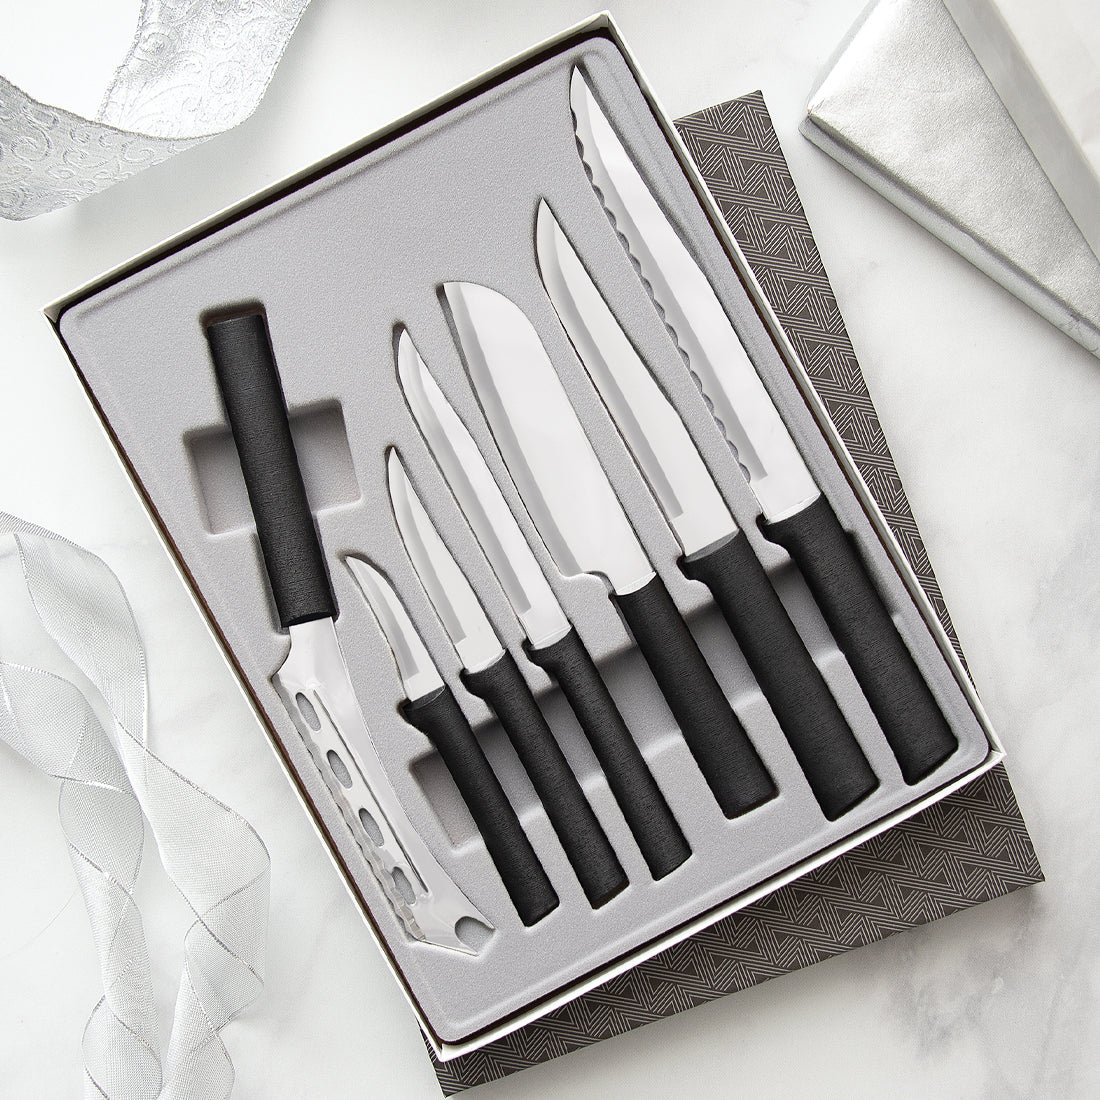 Rada Cutlery Anthem Series Serrated Knife Set Stainless Steel Dining Steak Knives with Ergonomic Black Resin Handles Set of 6